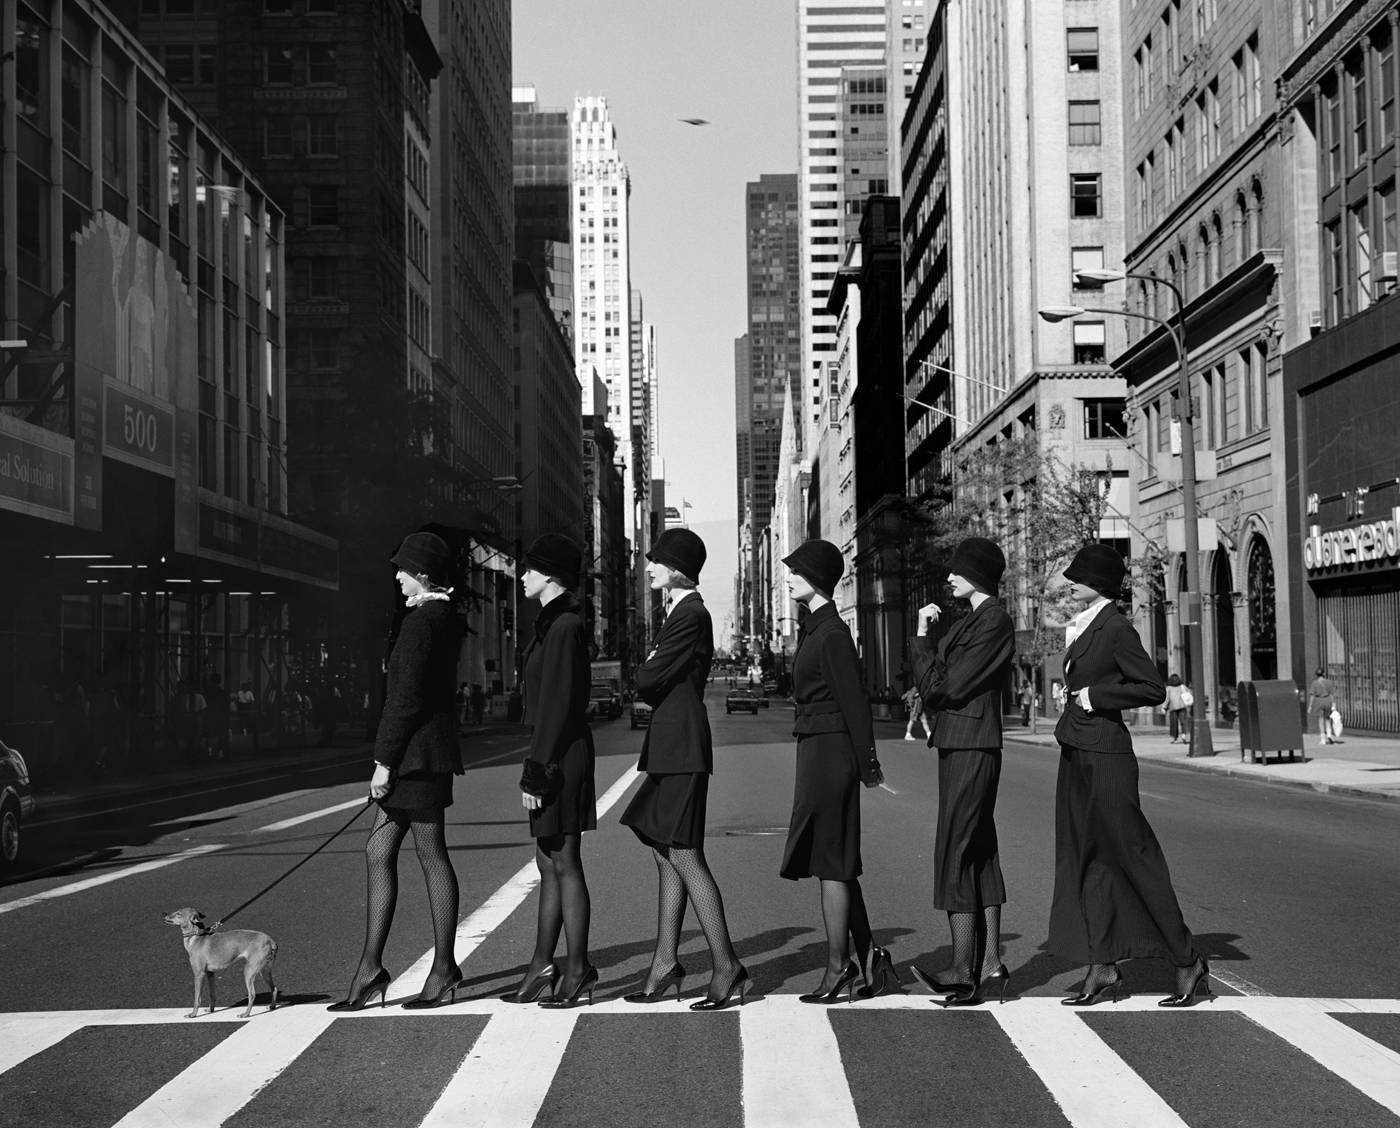 Rodney Smith Figurative Photograph - Hemline,  New York, NY- 20 x 24 inch black and white posed fashion photograph